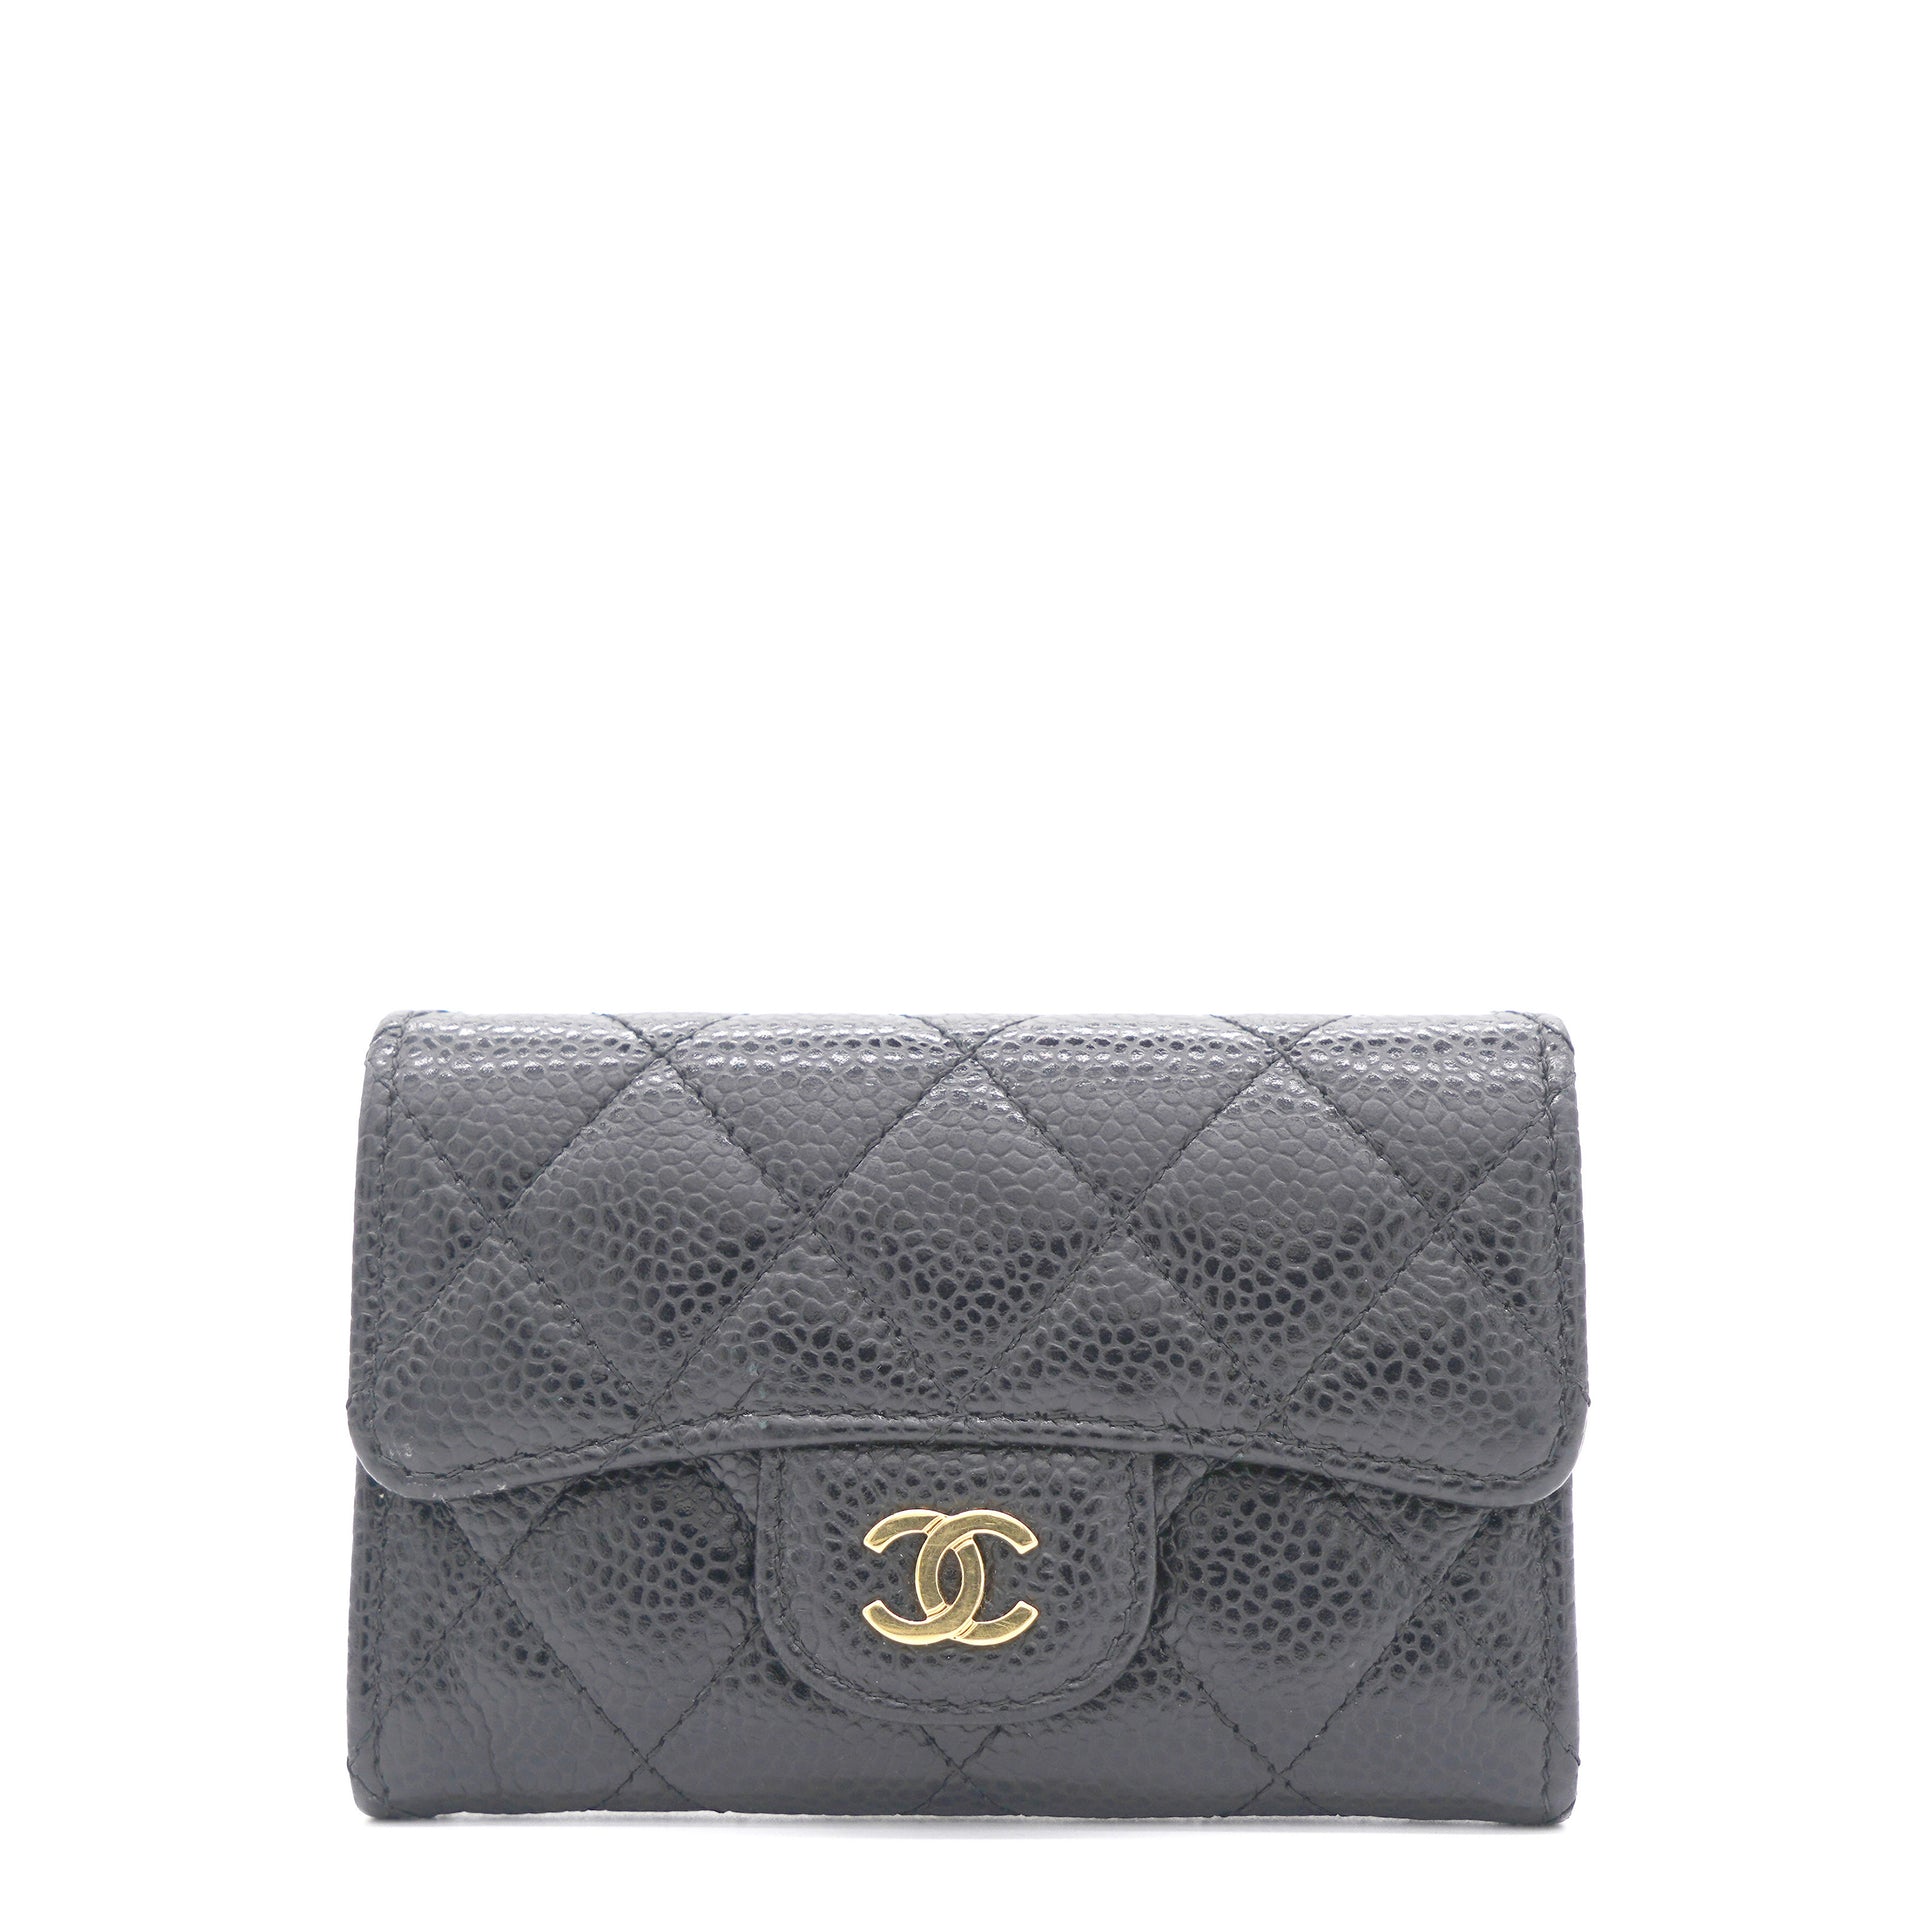 Chanel Black Caviar Small Classic Flap Wallet